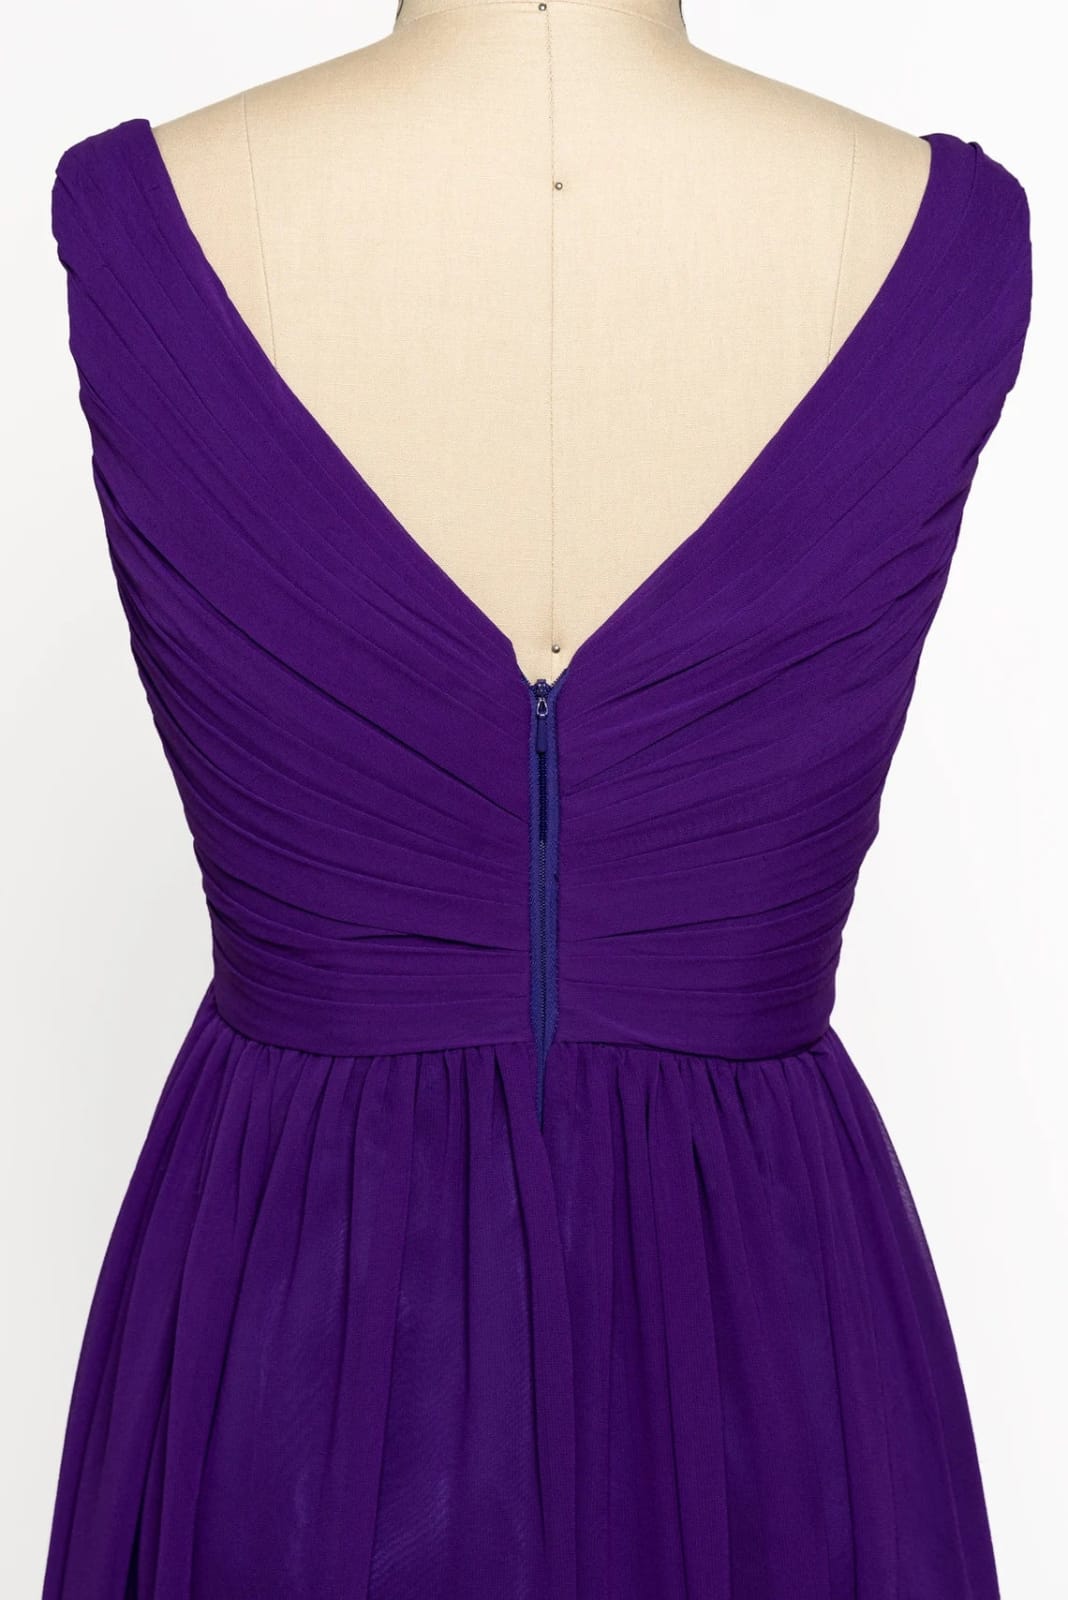 V Neck Sleeveless Crisscross Short Purple Chiffon Bridesmaid Dress